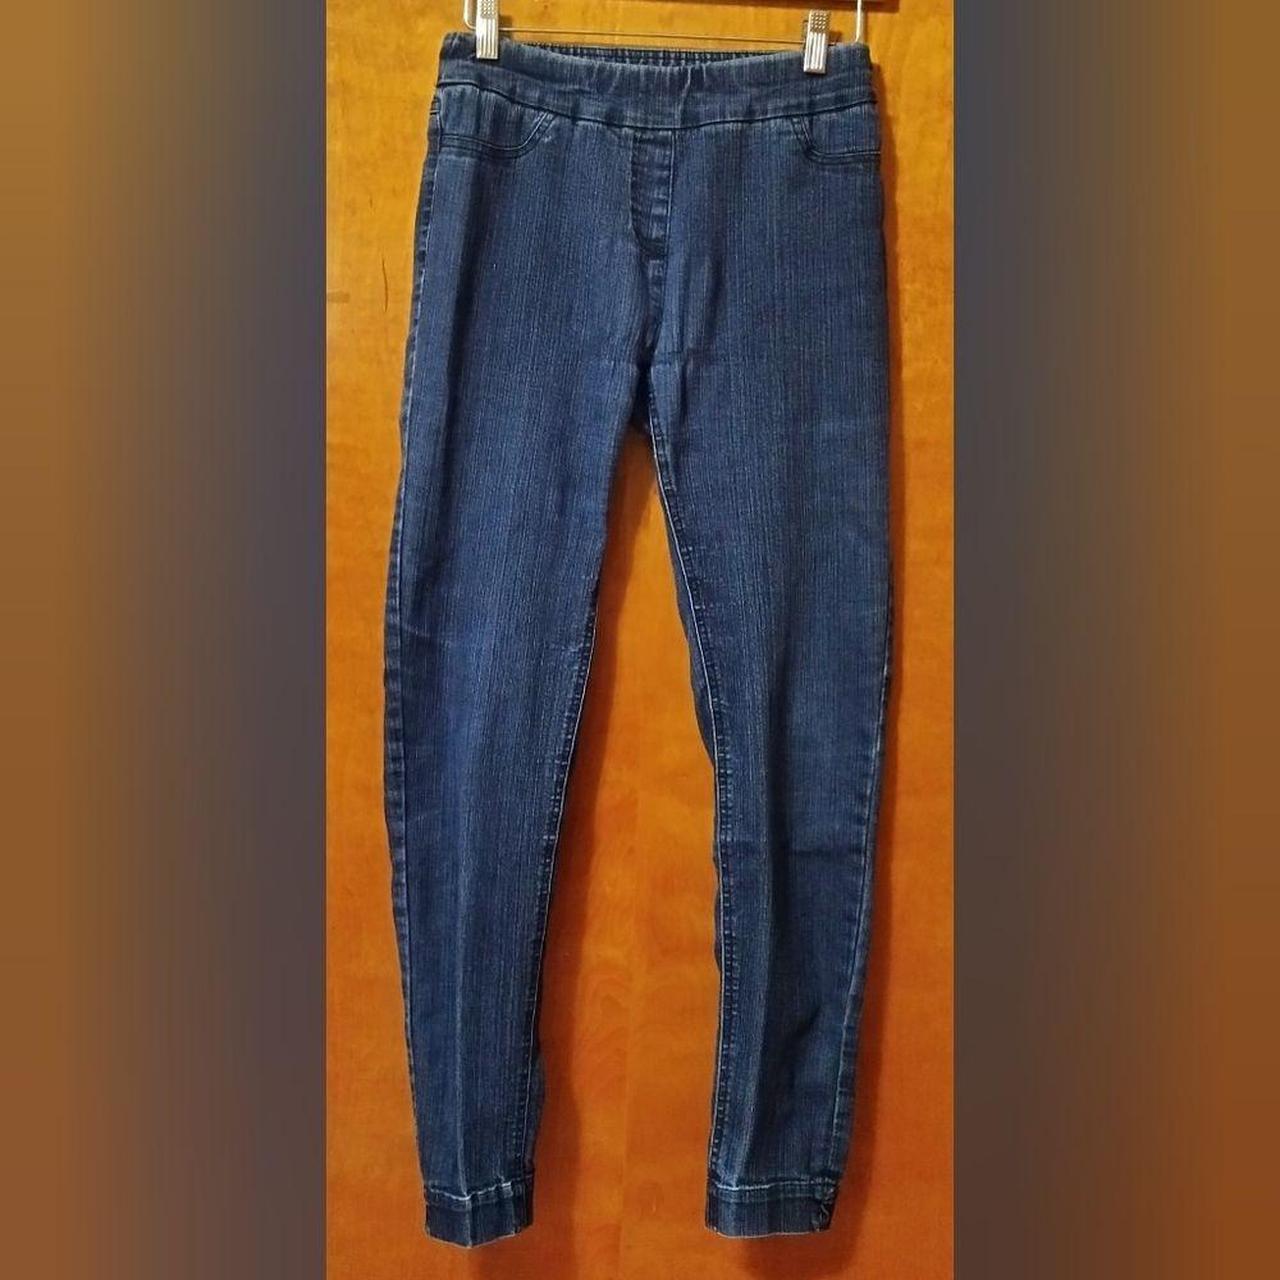 Jeggings - Ankle length jeggings/stretch jeans - - Depop